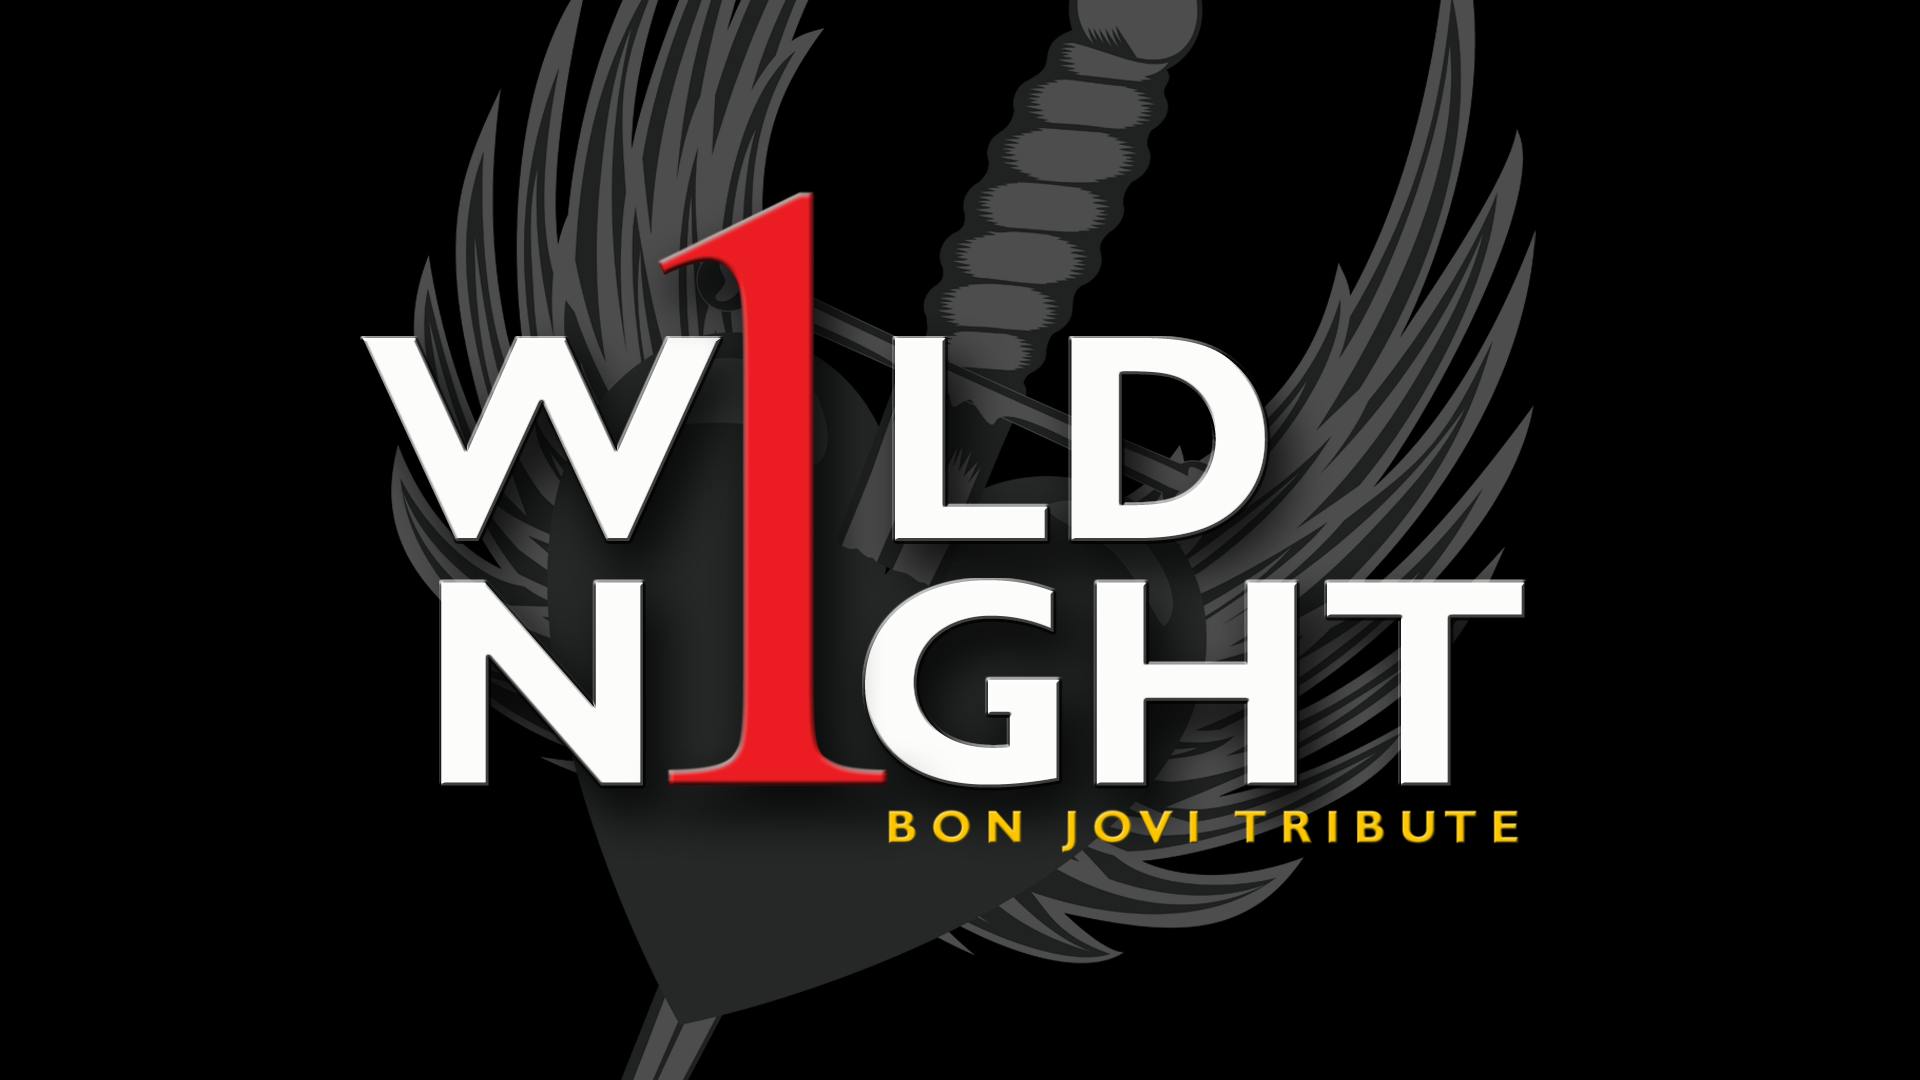 Bon Jovi Tribute show with 1 Wild Night